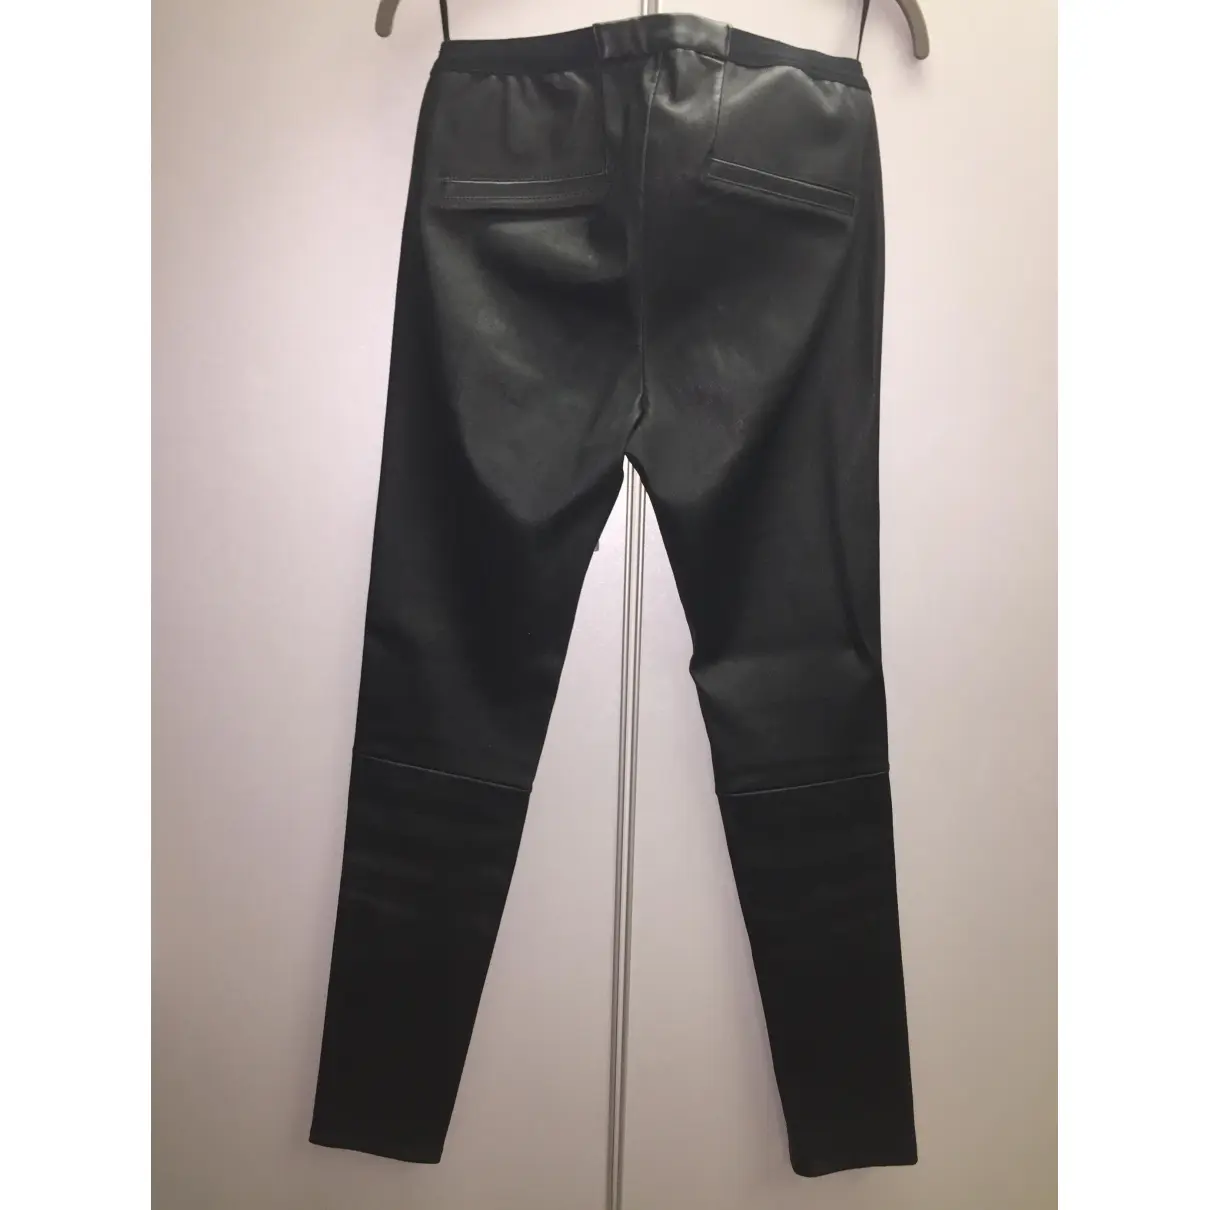 Buy Helmut Lang Leather slim pants online